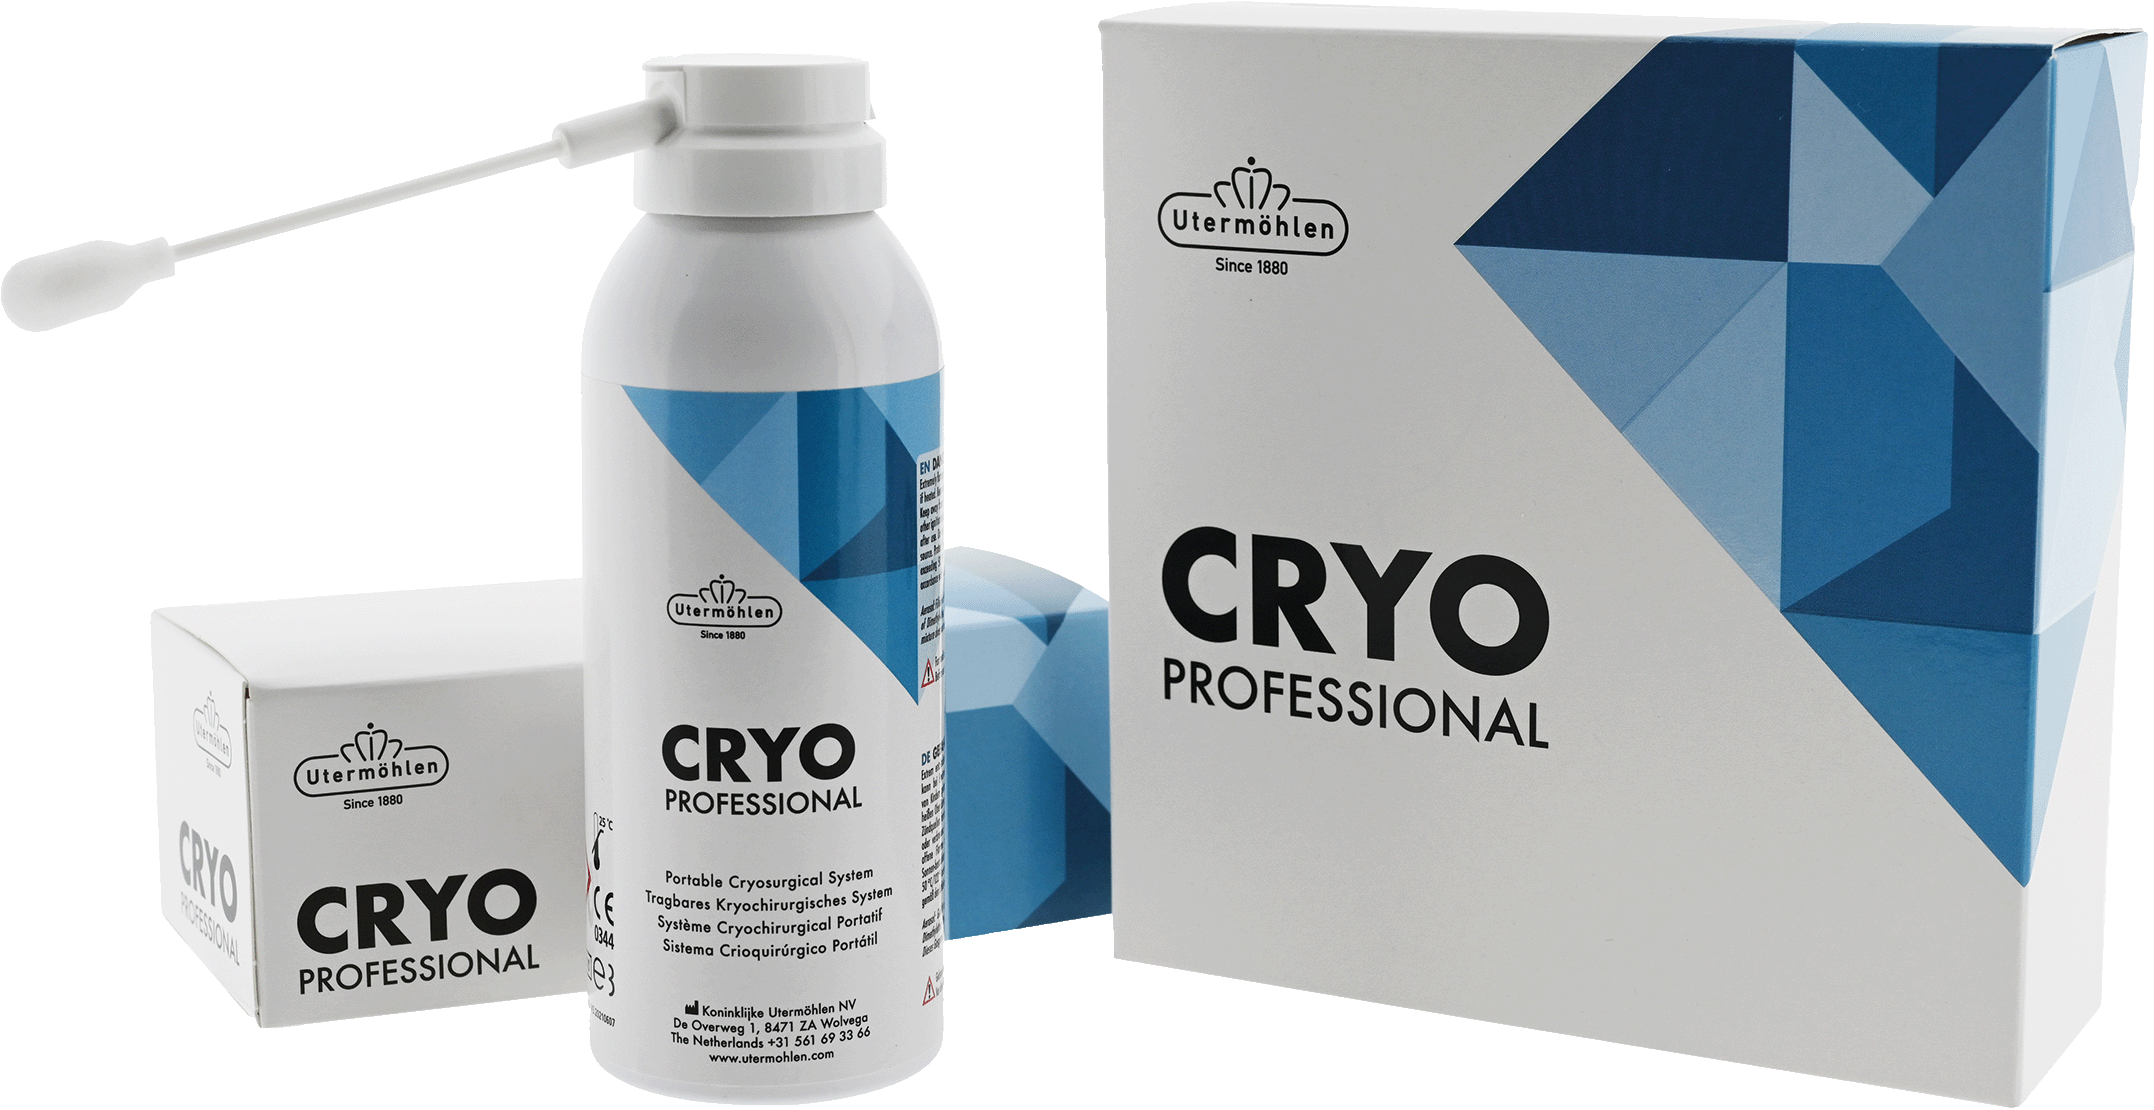 Cryo Professional Utermöhlen